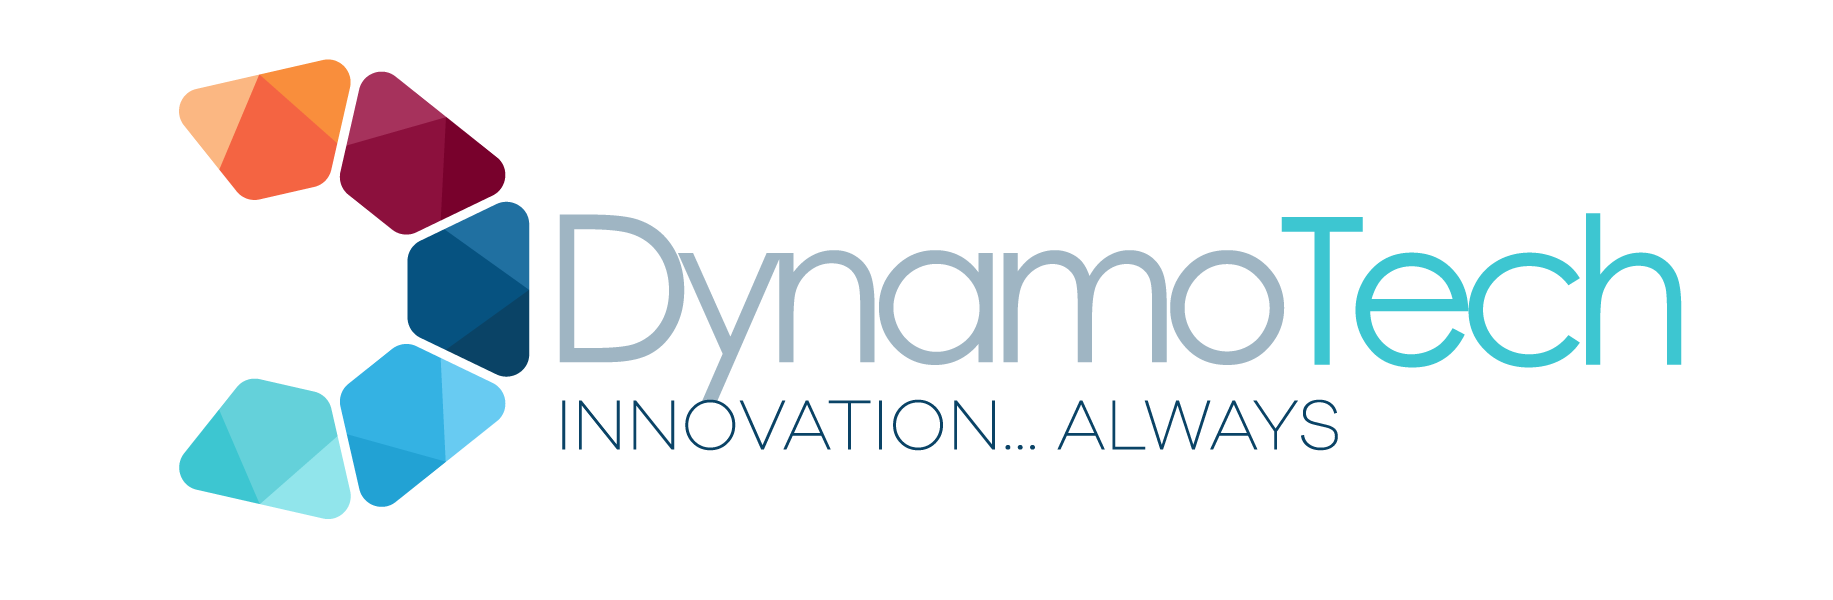 Desenvolvdido por DynamoTech! Clqiue aqui e conheça a DynamoTech.